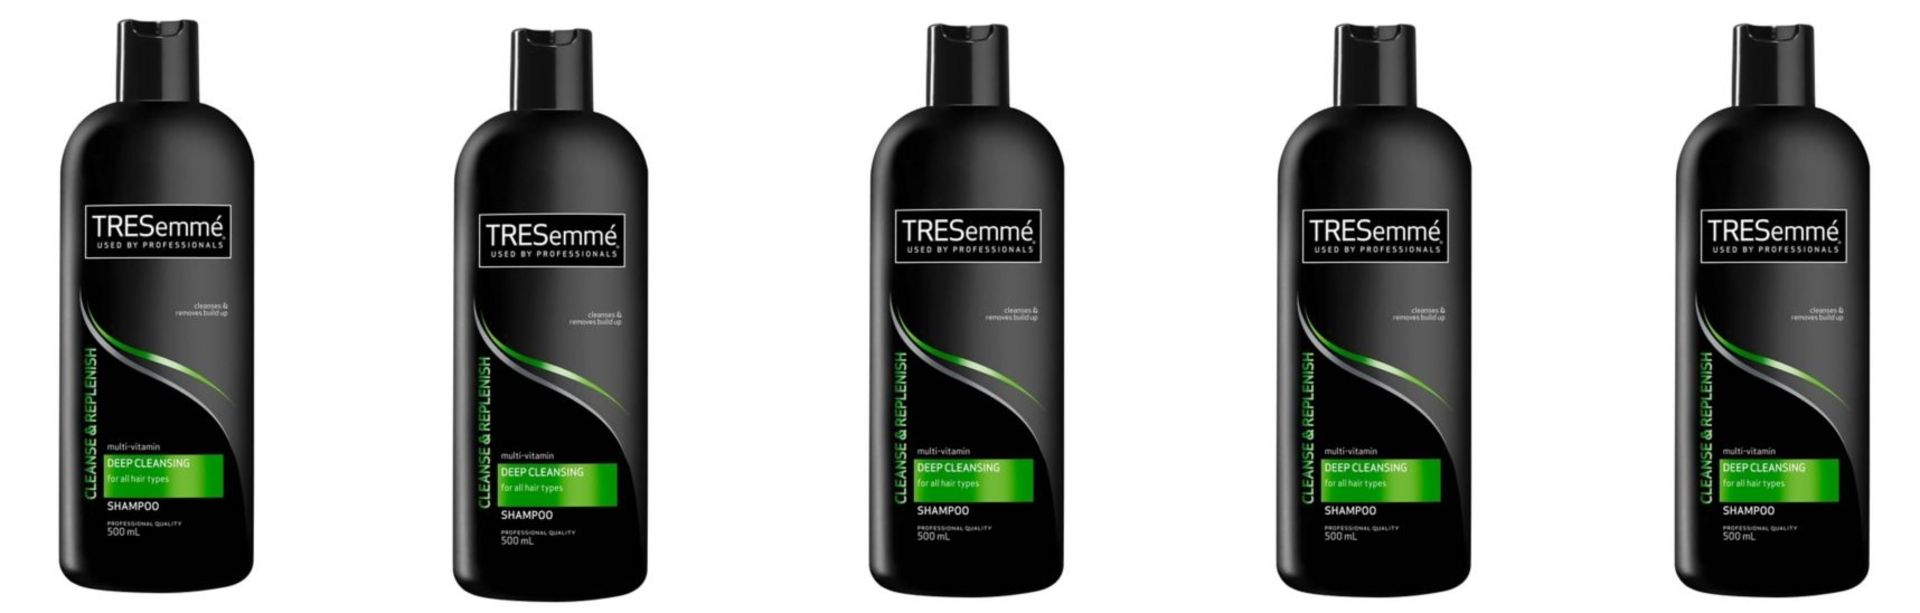 V *TRADE QTY* Grade A A Lot Of Five 500ml TRESemme Cleanse & Replenish Shampoo ISP £19.95 (